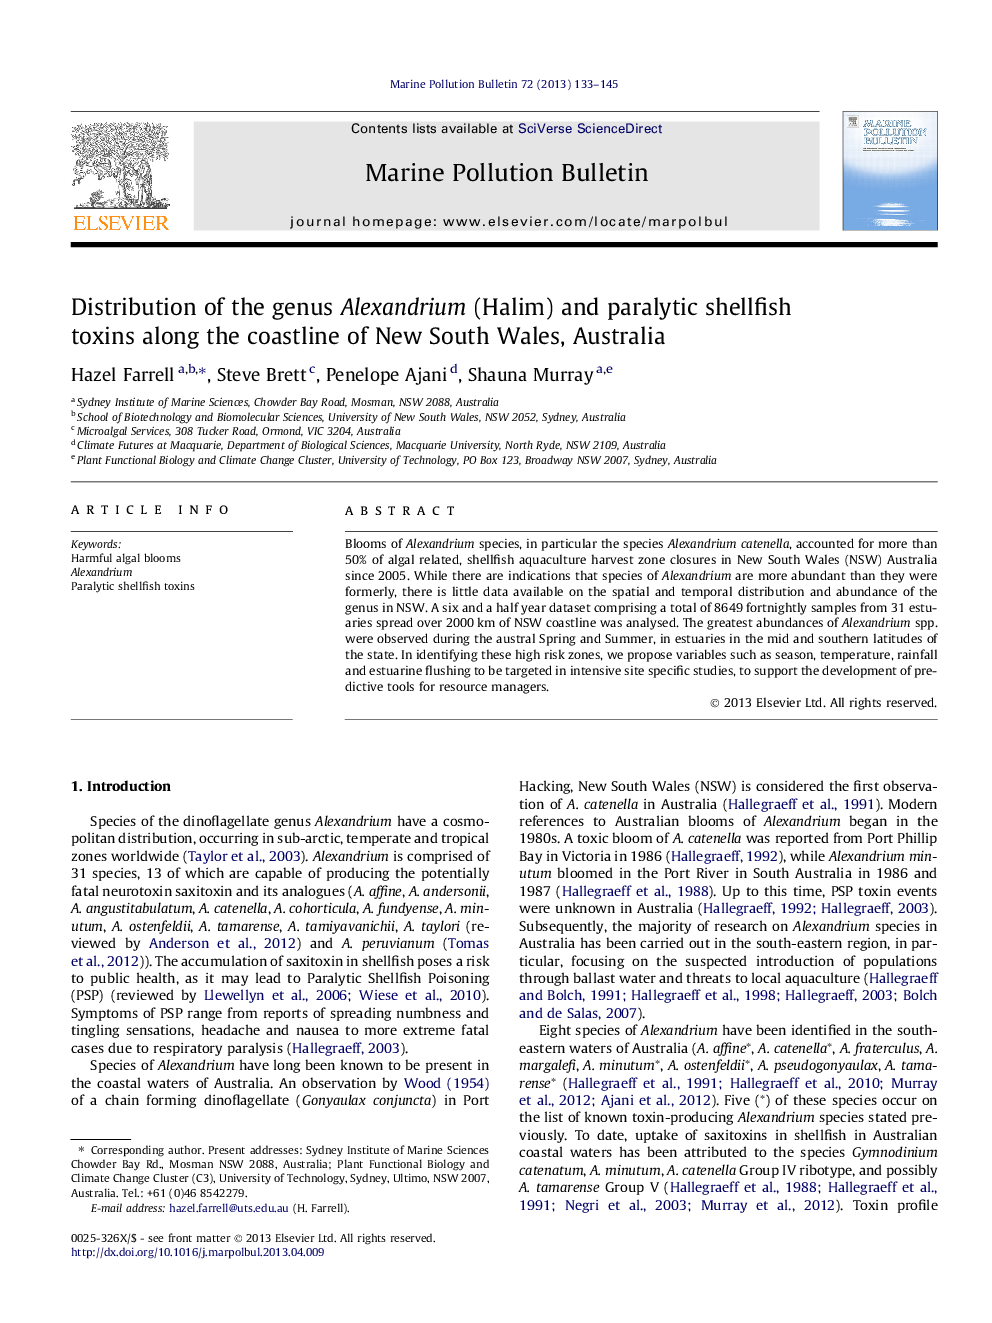 Distribution of the genus Alexandrium (Halim) and paralytic shellfish toxins along the coastline of New South Wales, Australia